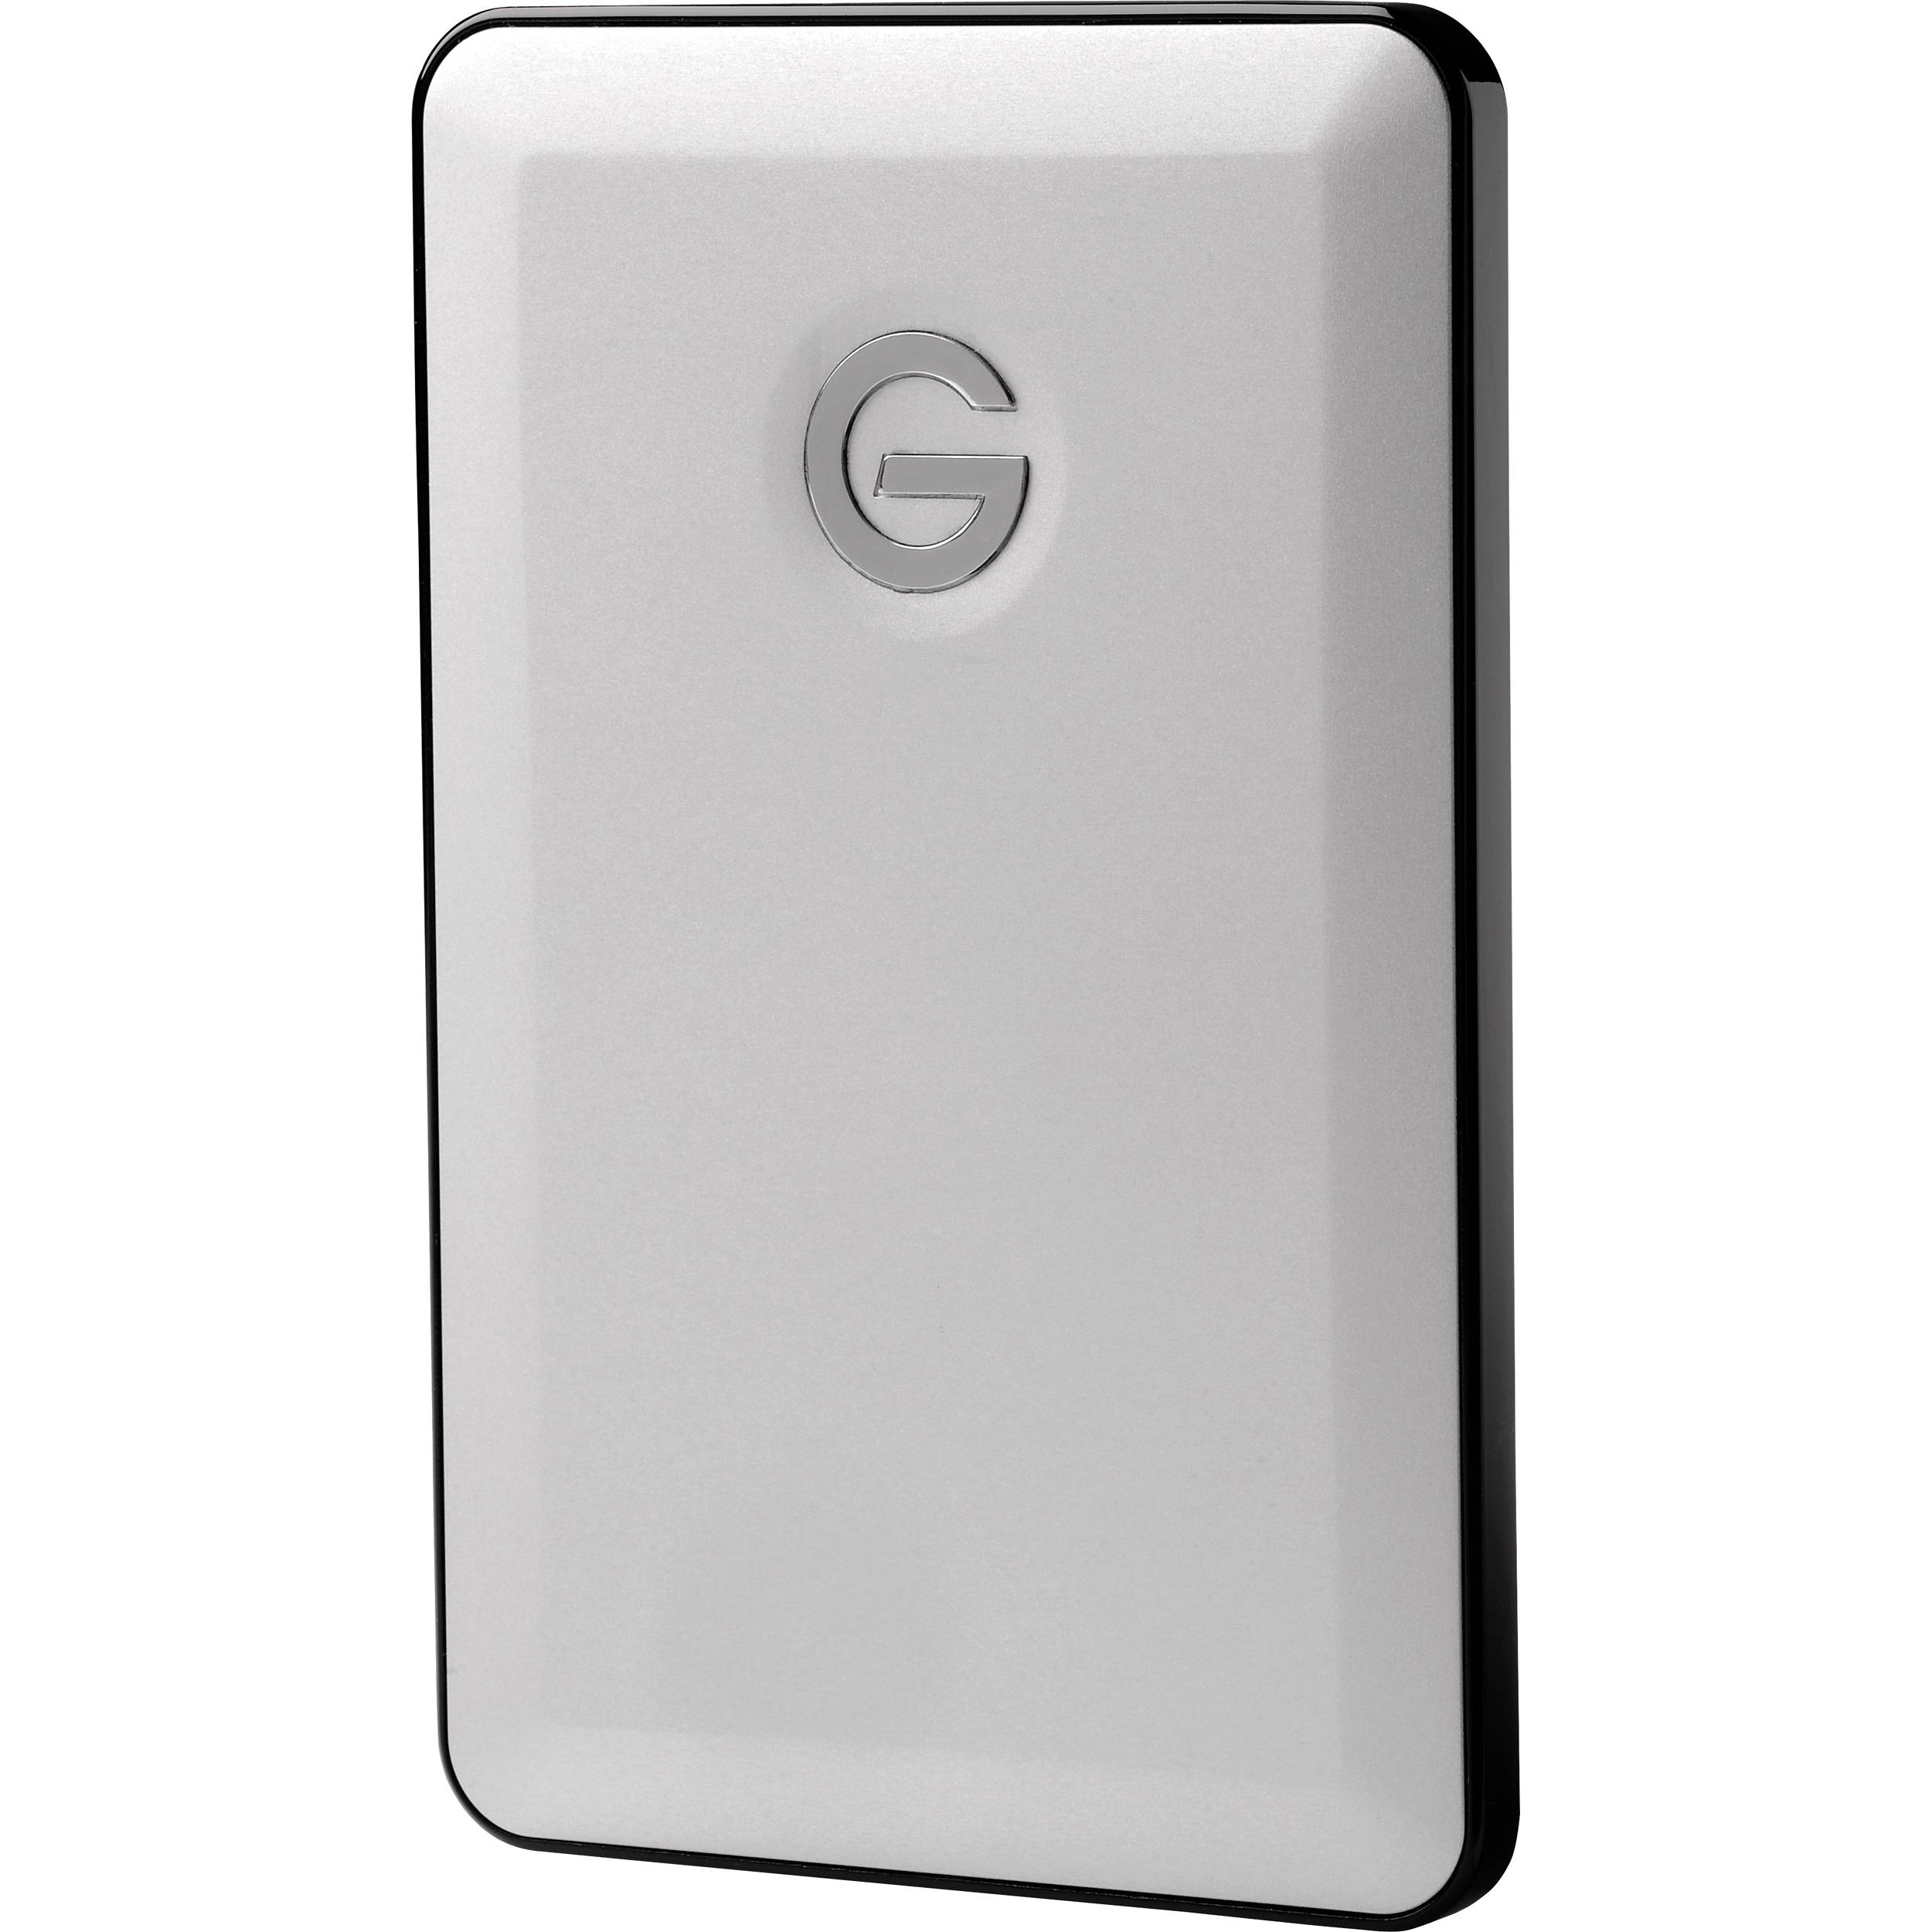 G-Technology 500GB G-DRIVE slim 5400 rpm Portable USB 3.0 Drive